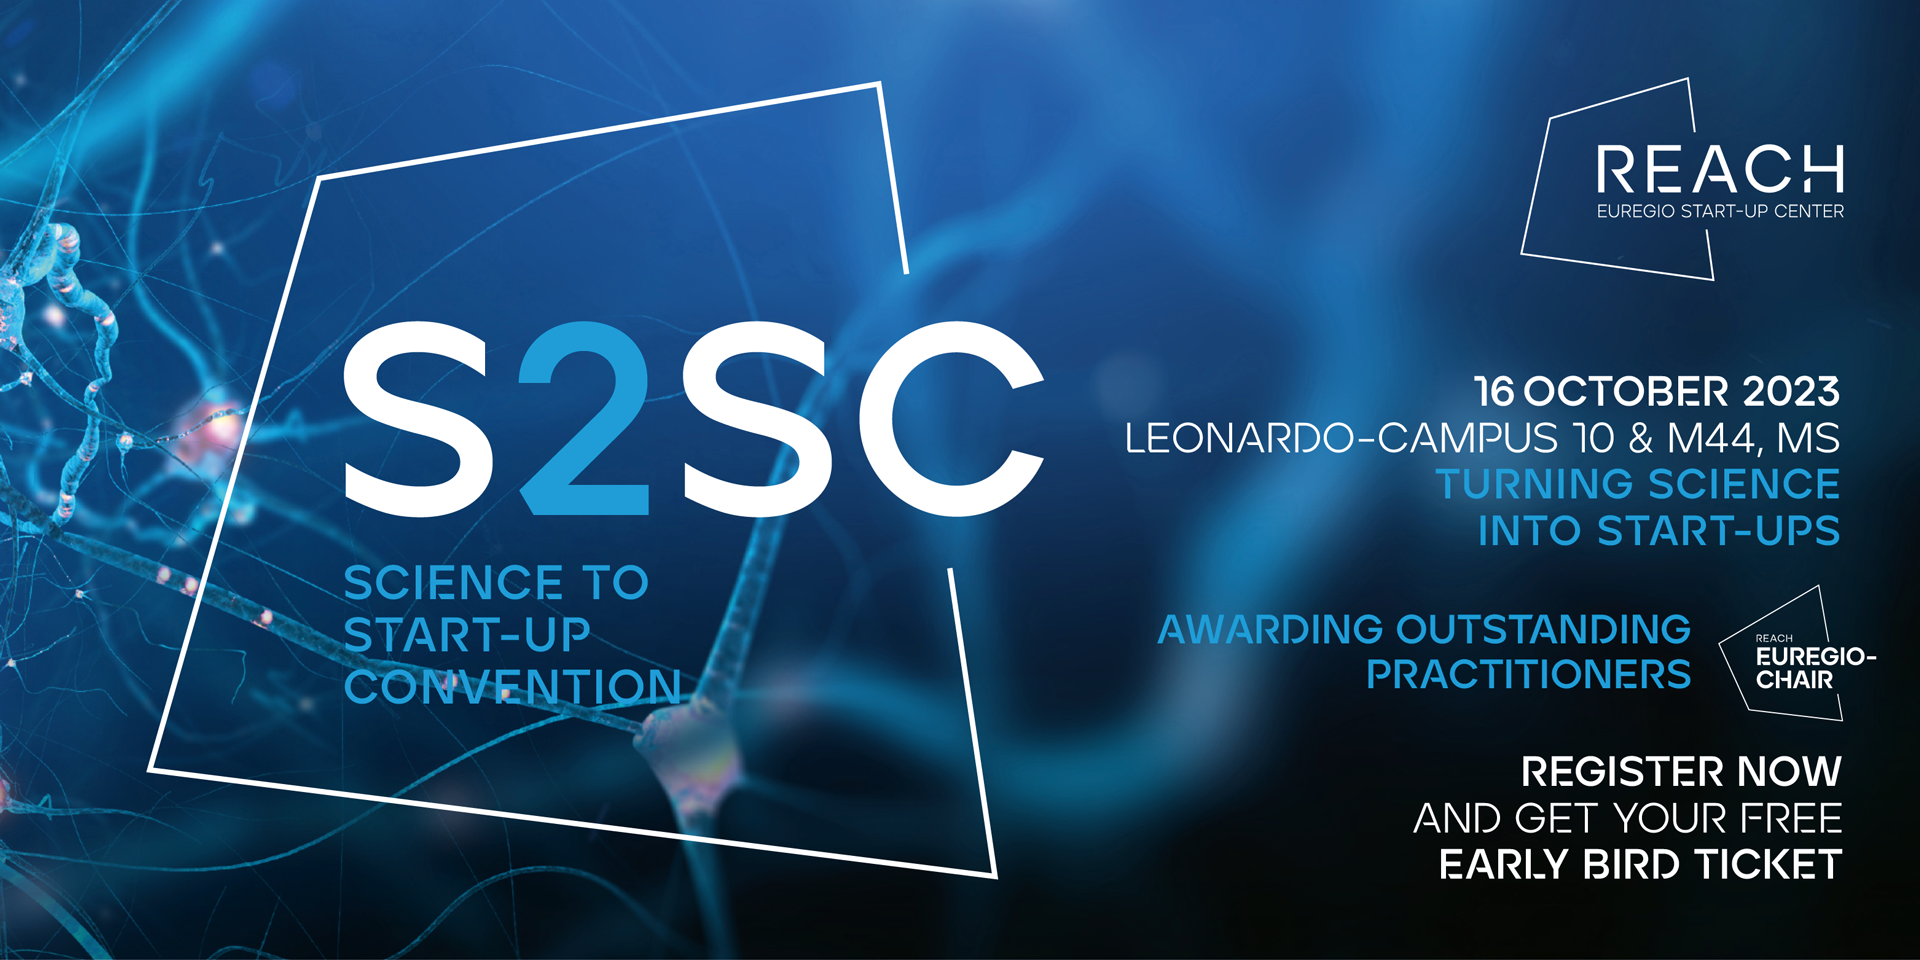 REACH S2SC-Award #2023